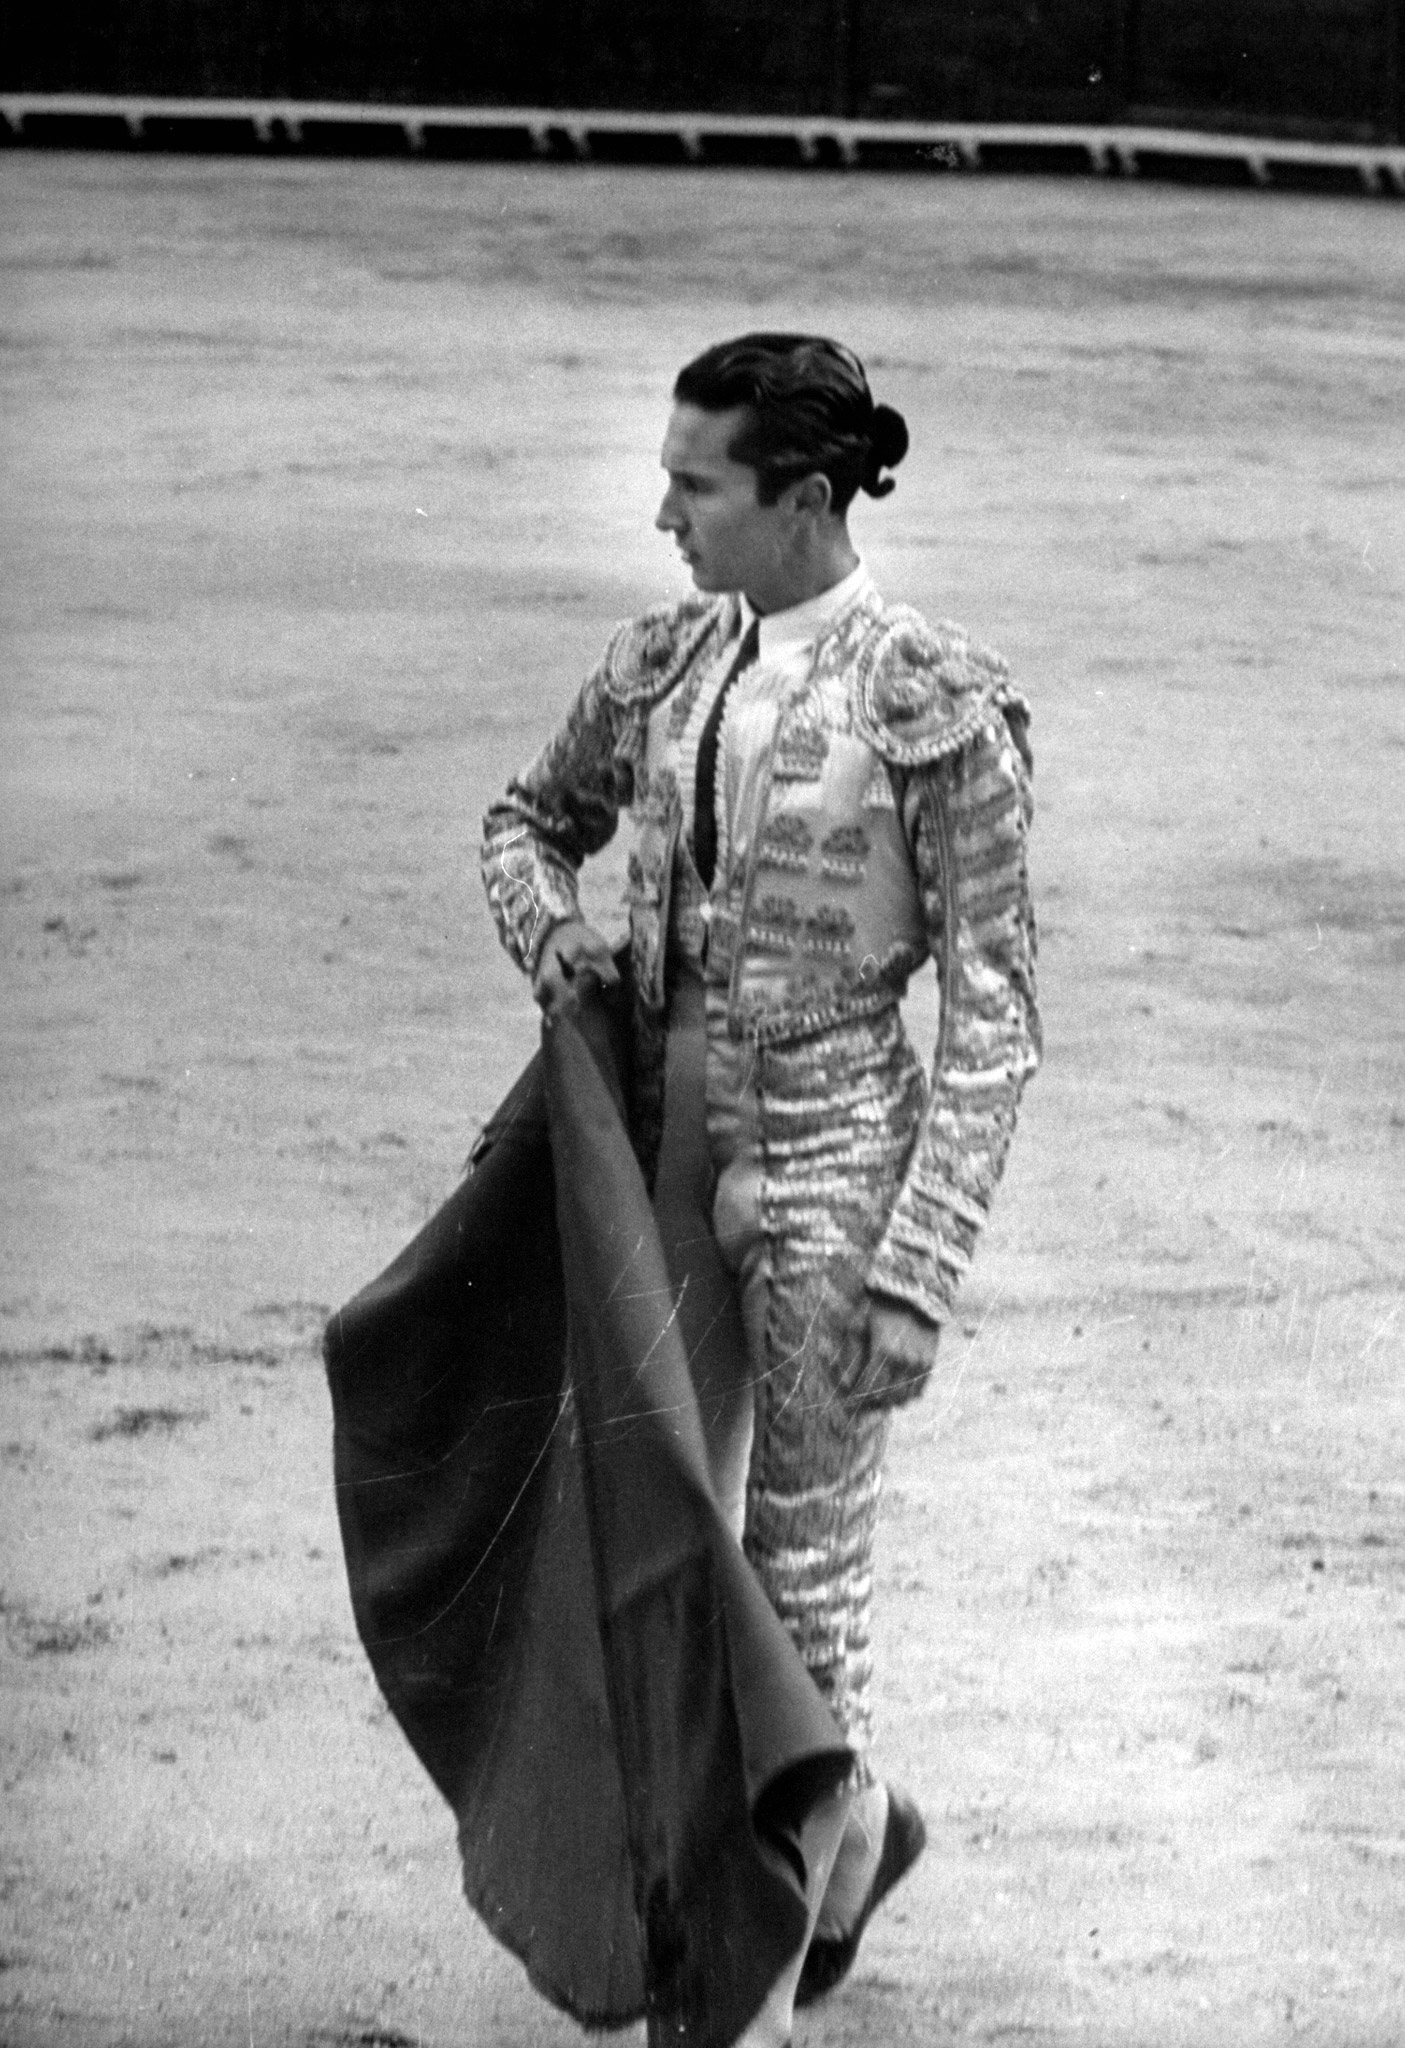 Matador in the bullring during the festival of San Fermín.